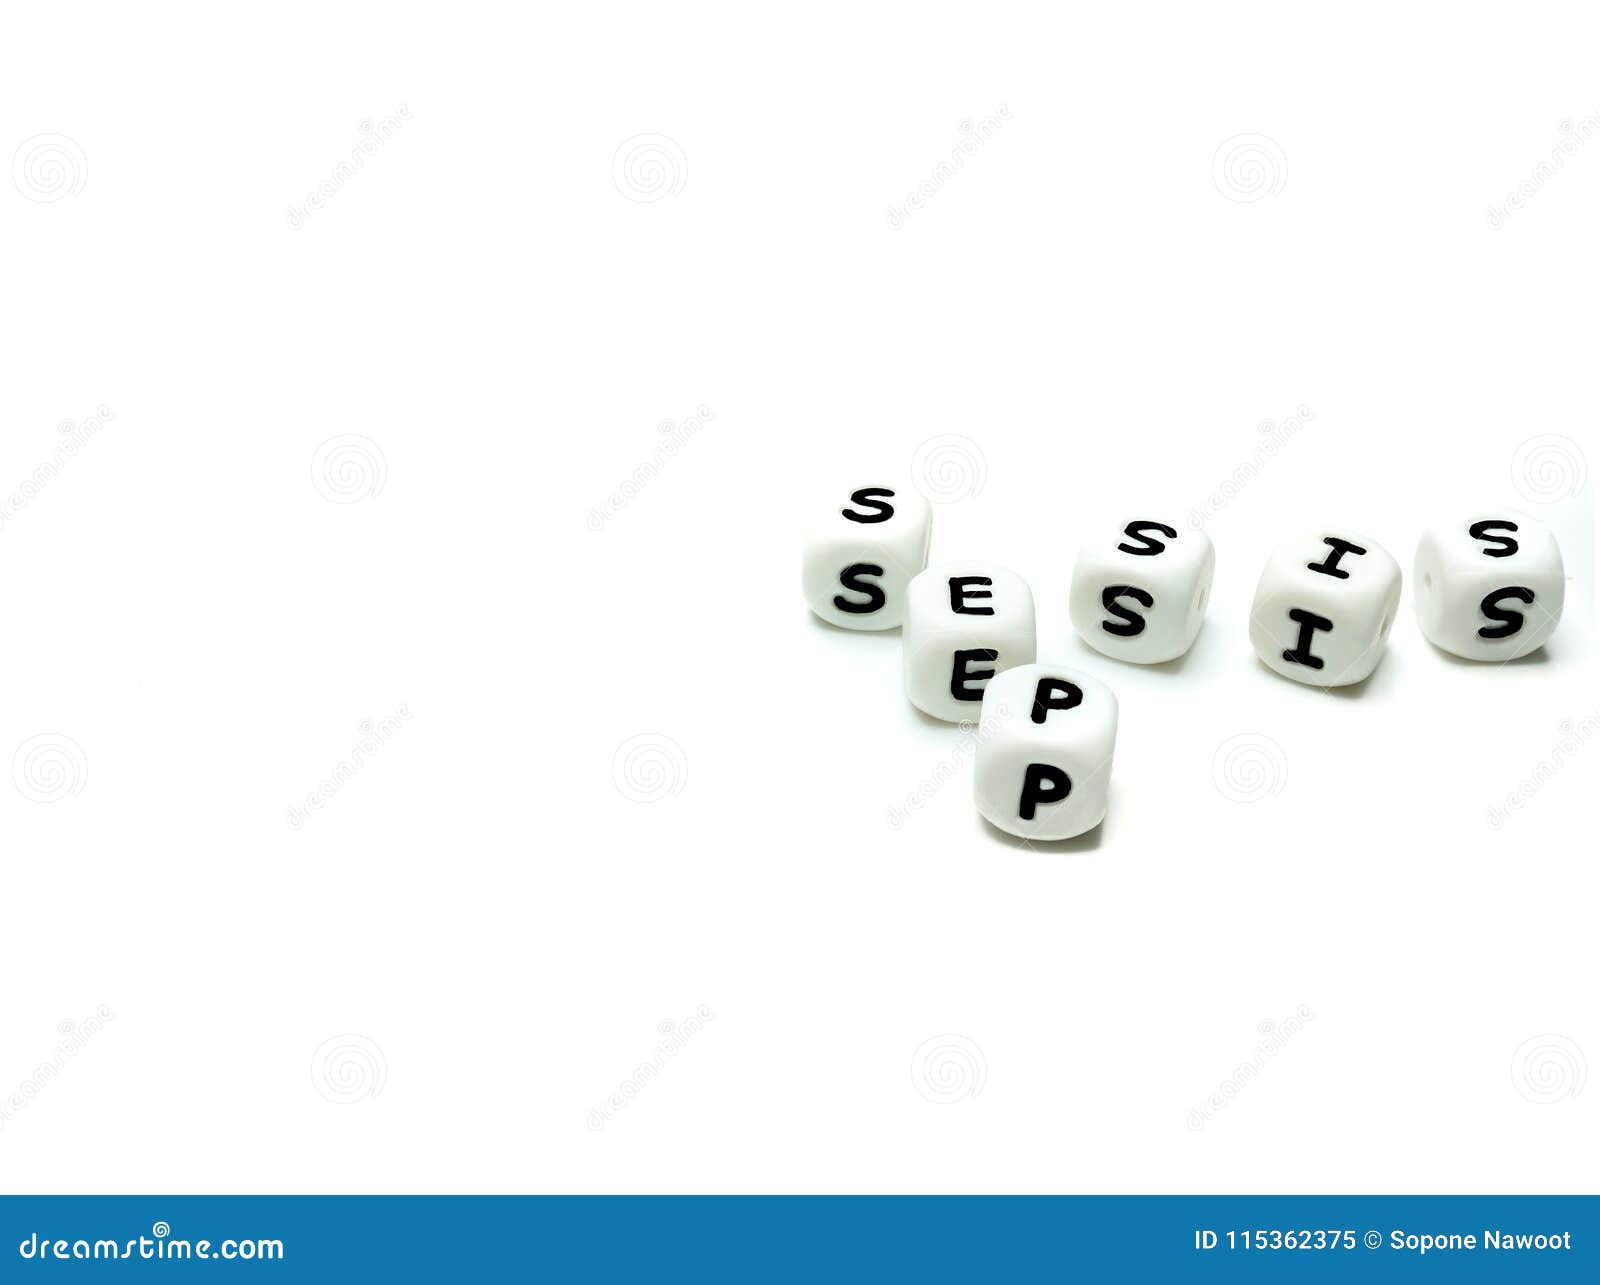 alphabet letters spelling sepsis